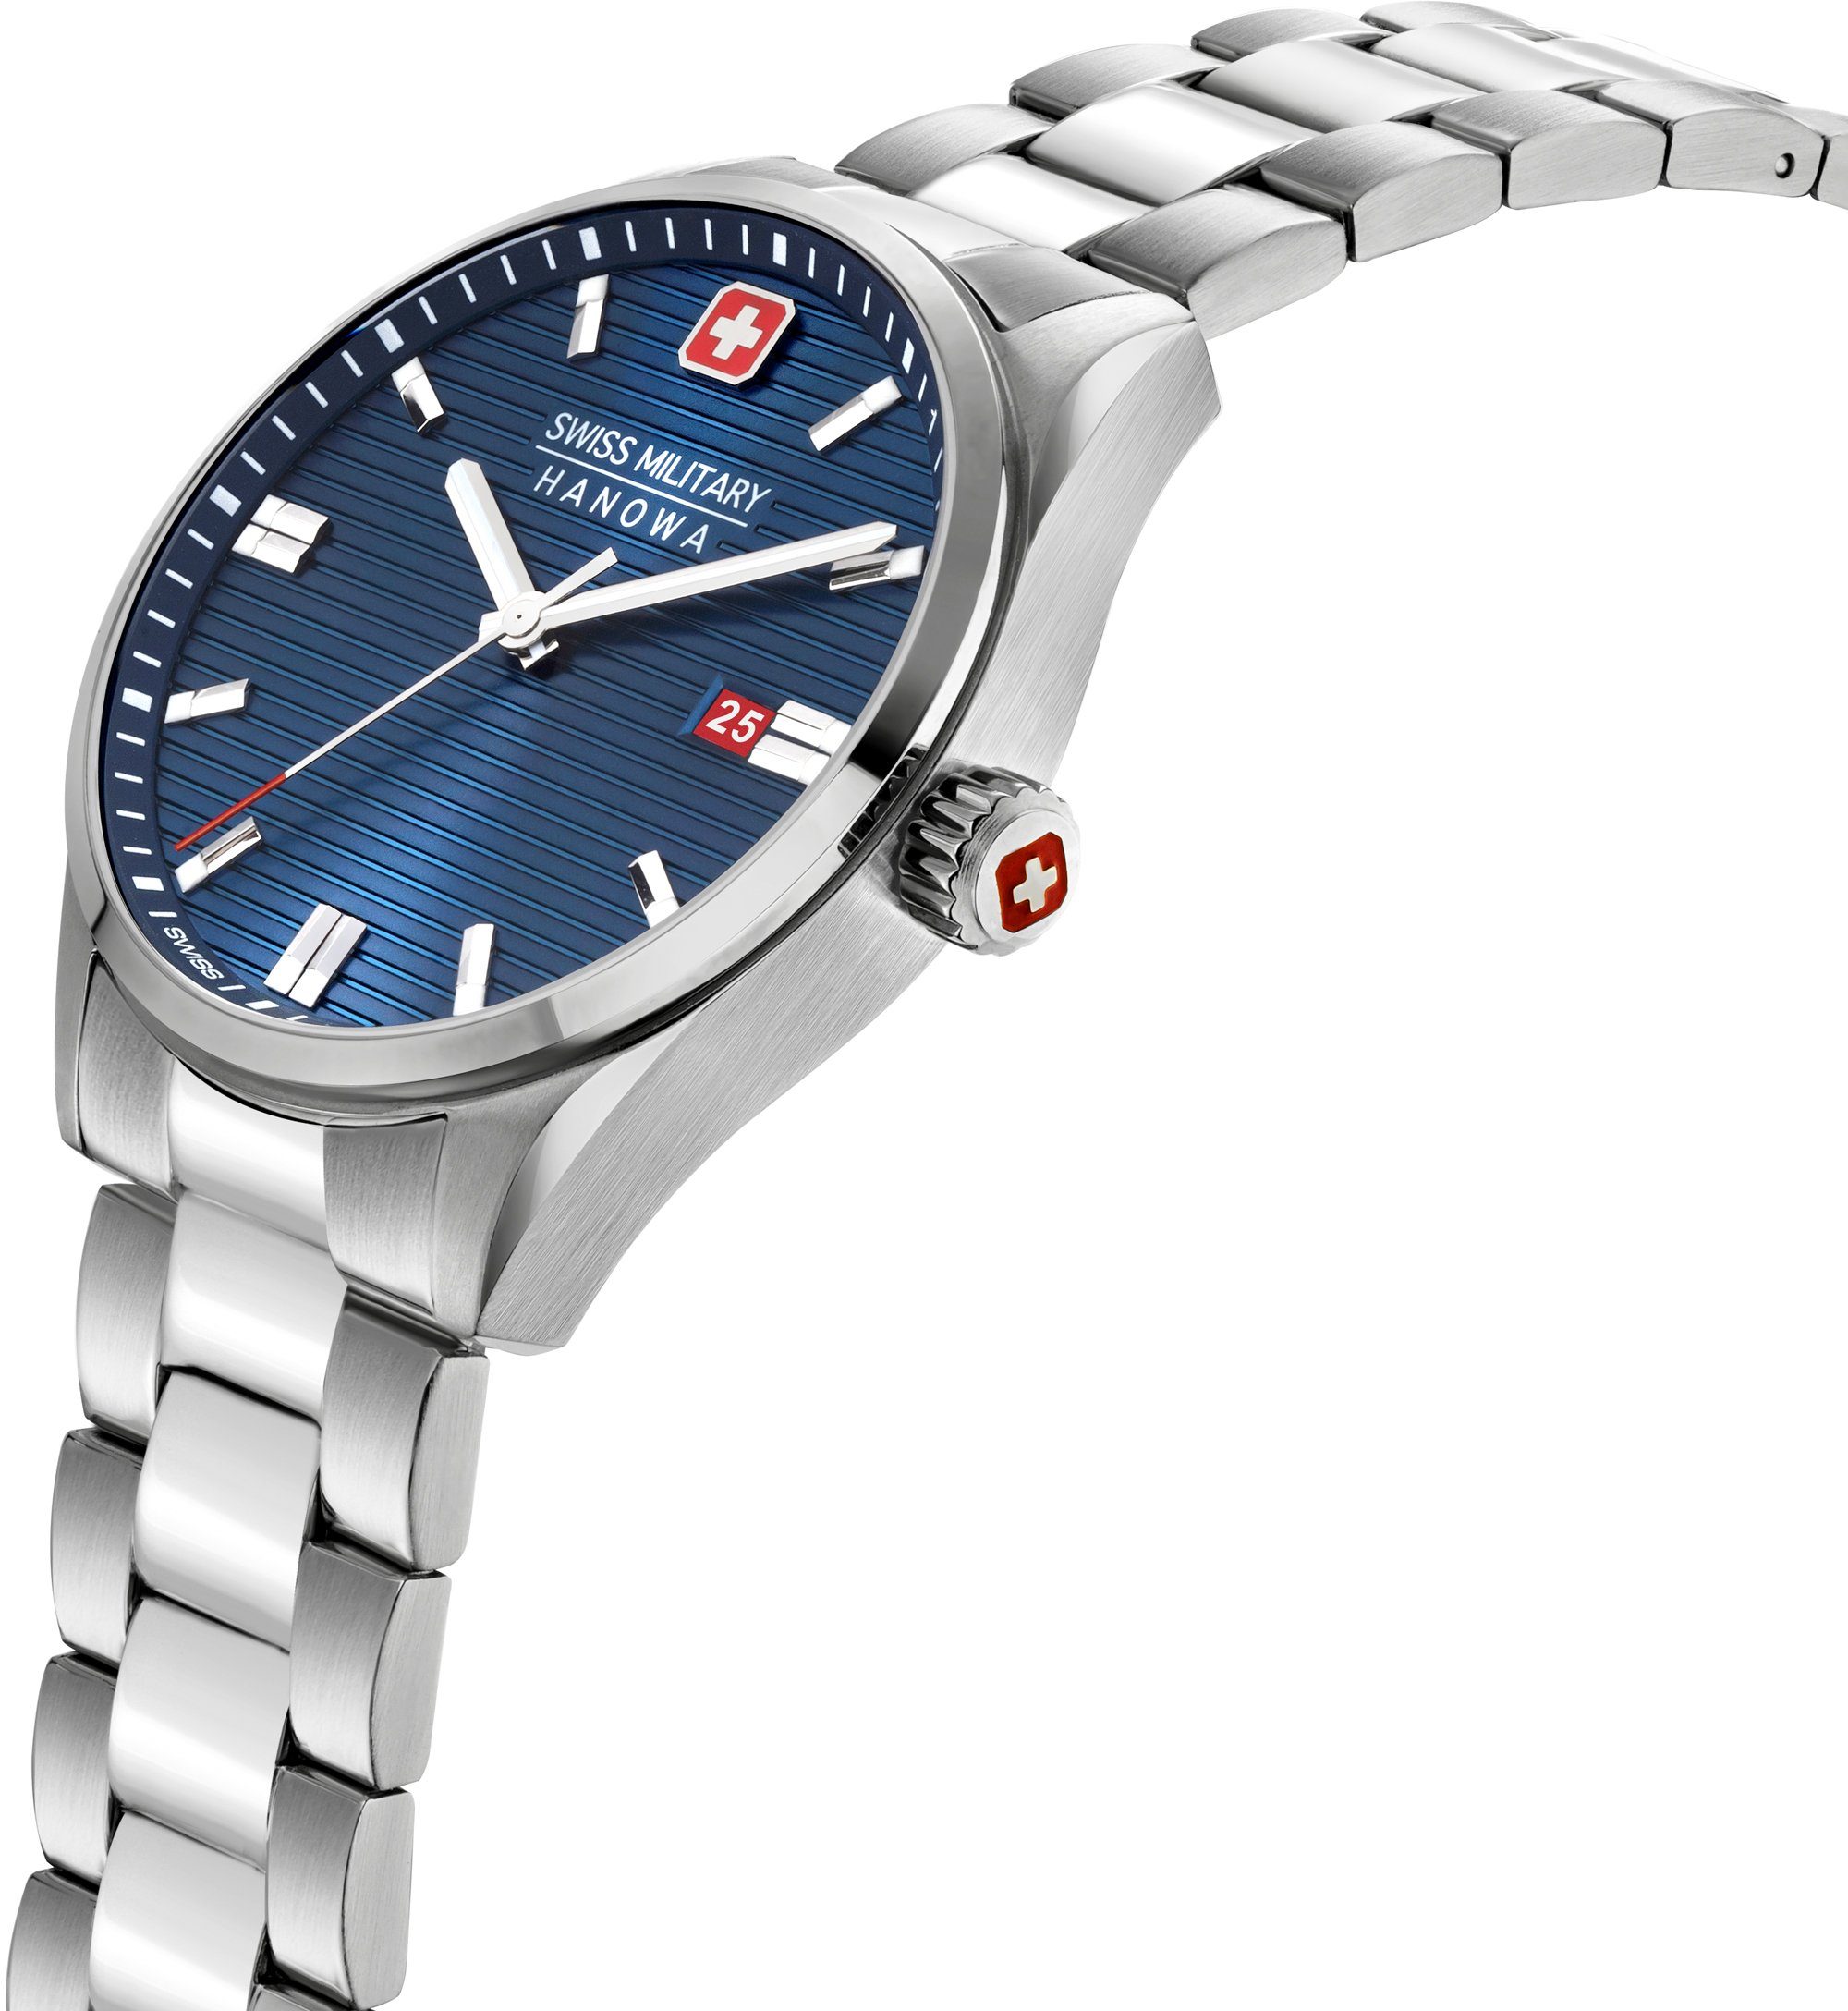 Schweizer Uhr SMWGH2200102 Military Swiss Hanowa Blau ROADRUNNER,